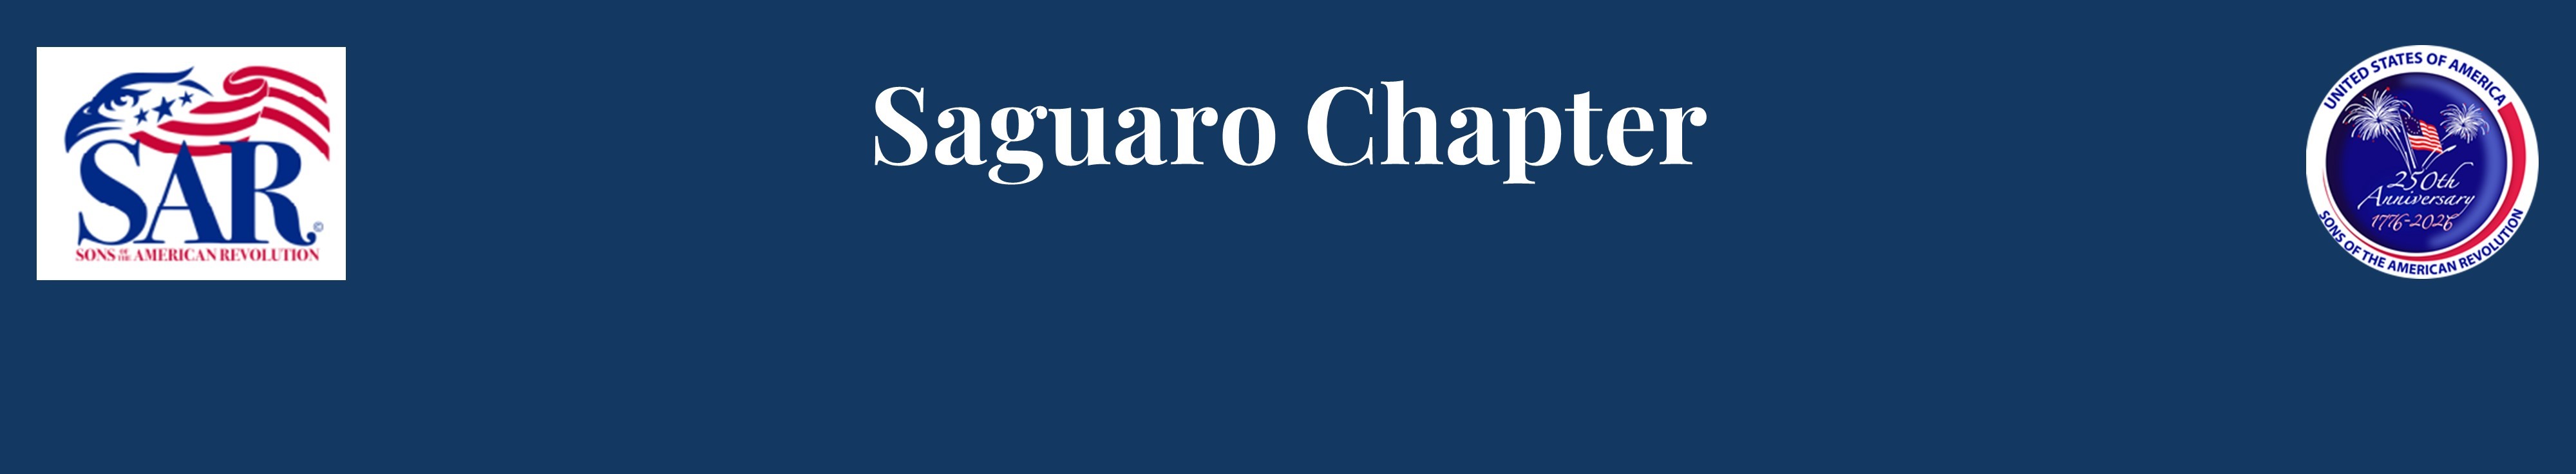 Saguaro Chapter Banner